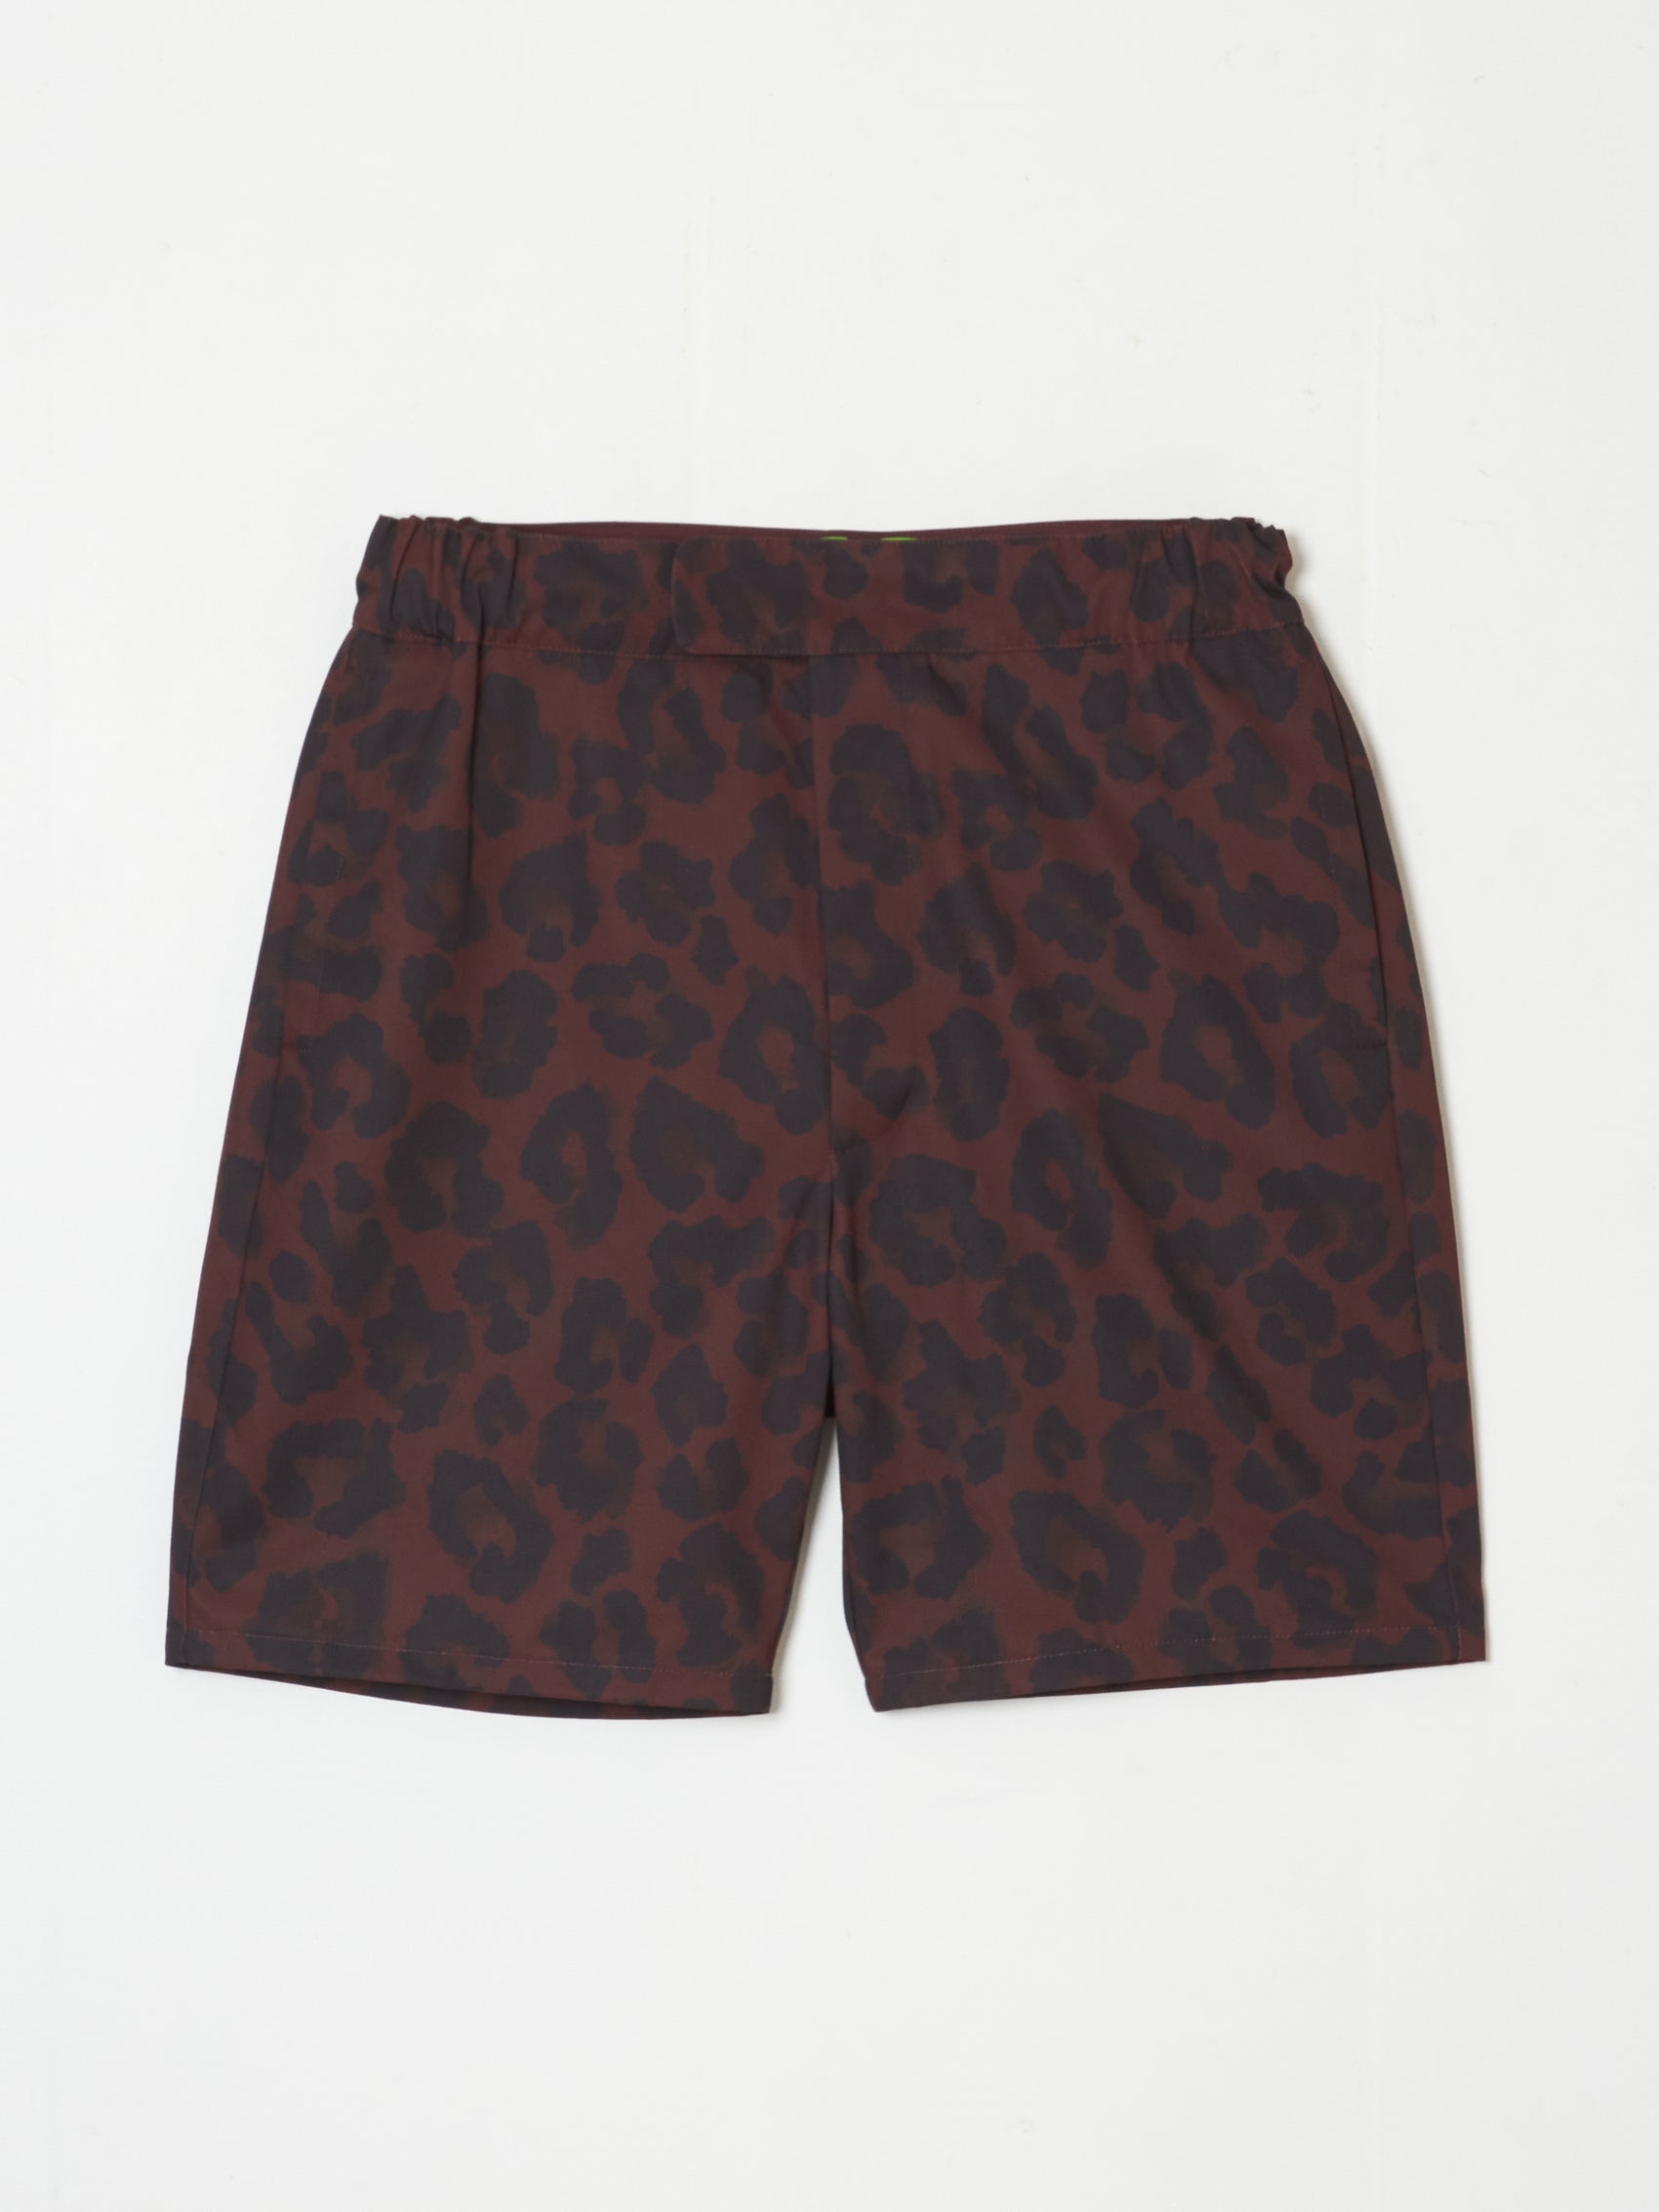 Leopard half pants